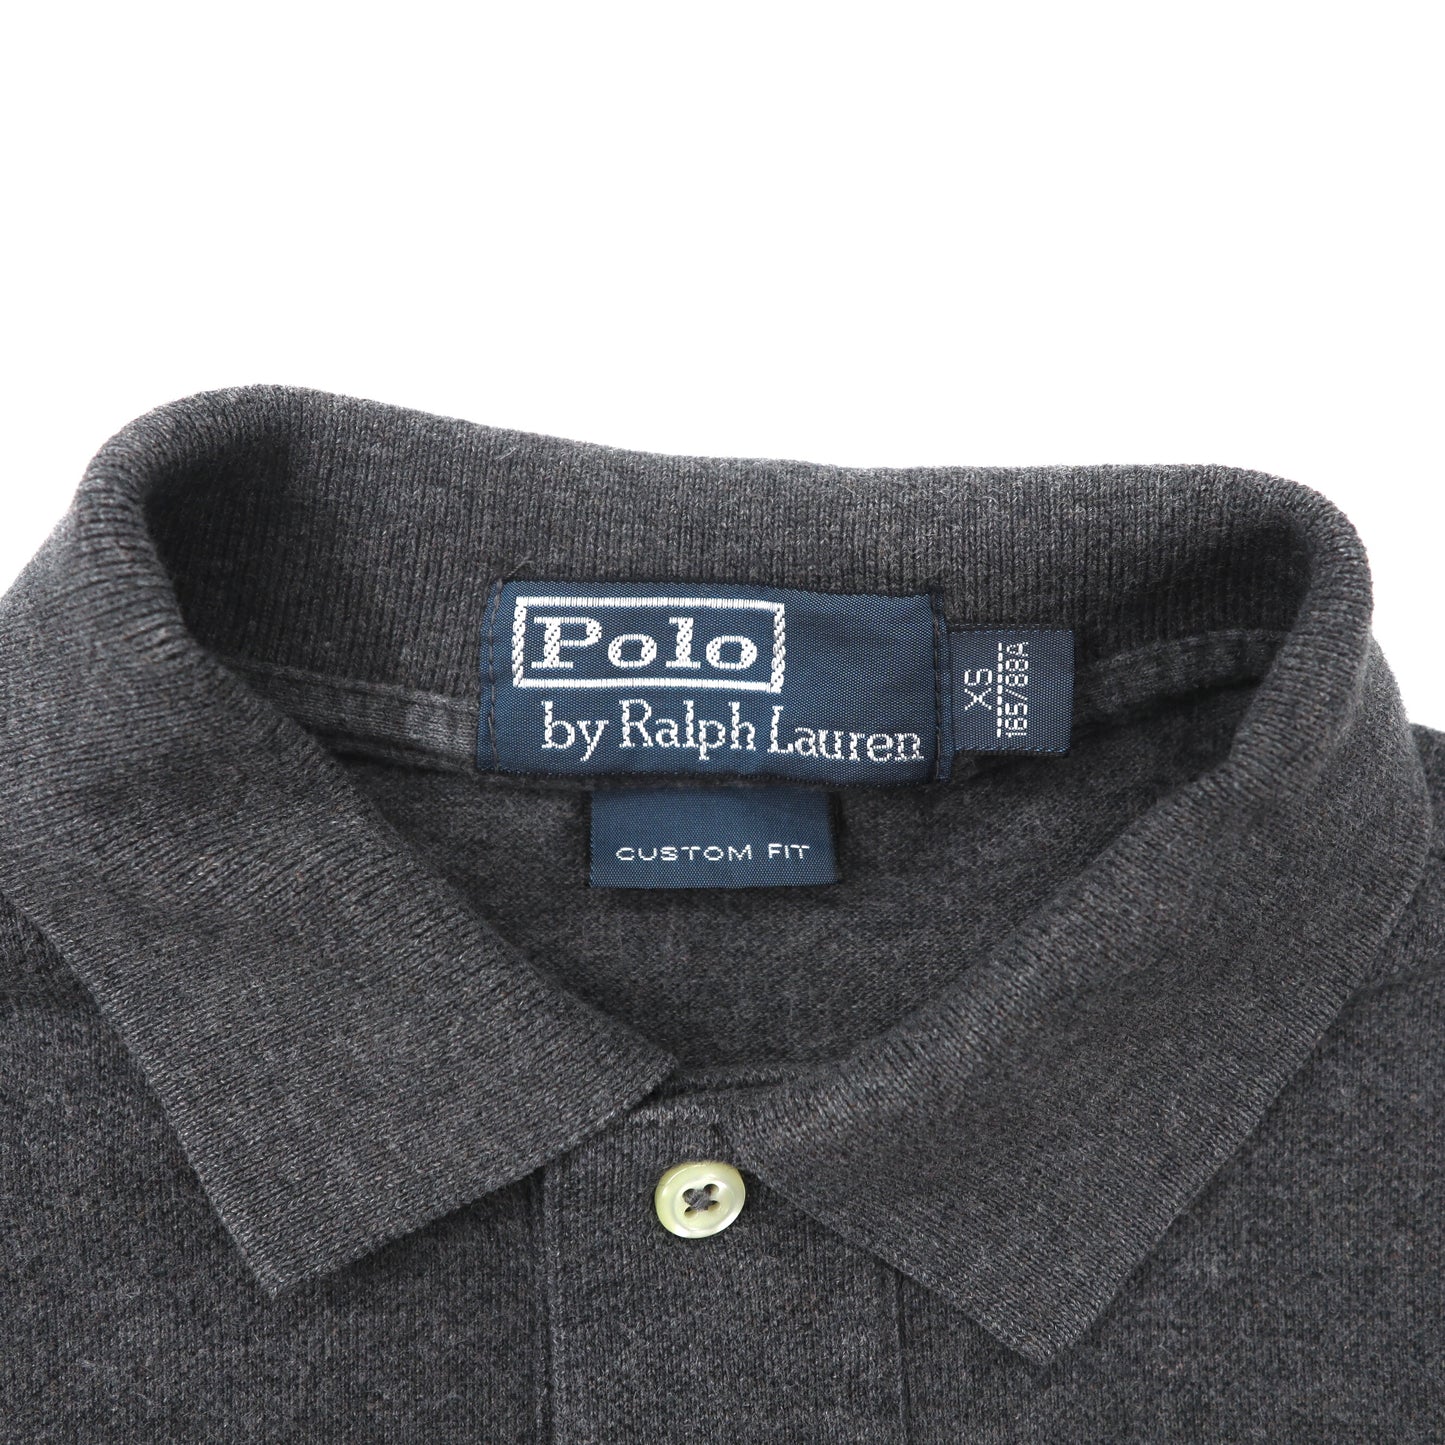 Polo by Ralph Lauren ポロシャツ 165 グレー コットン ビッグポニー刺繍 ナンバリング CUSTOM FIT